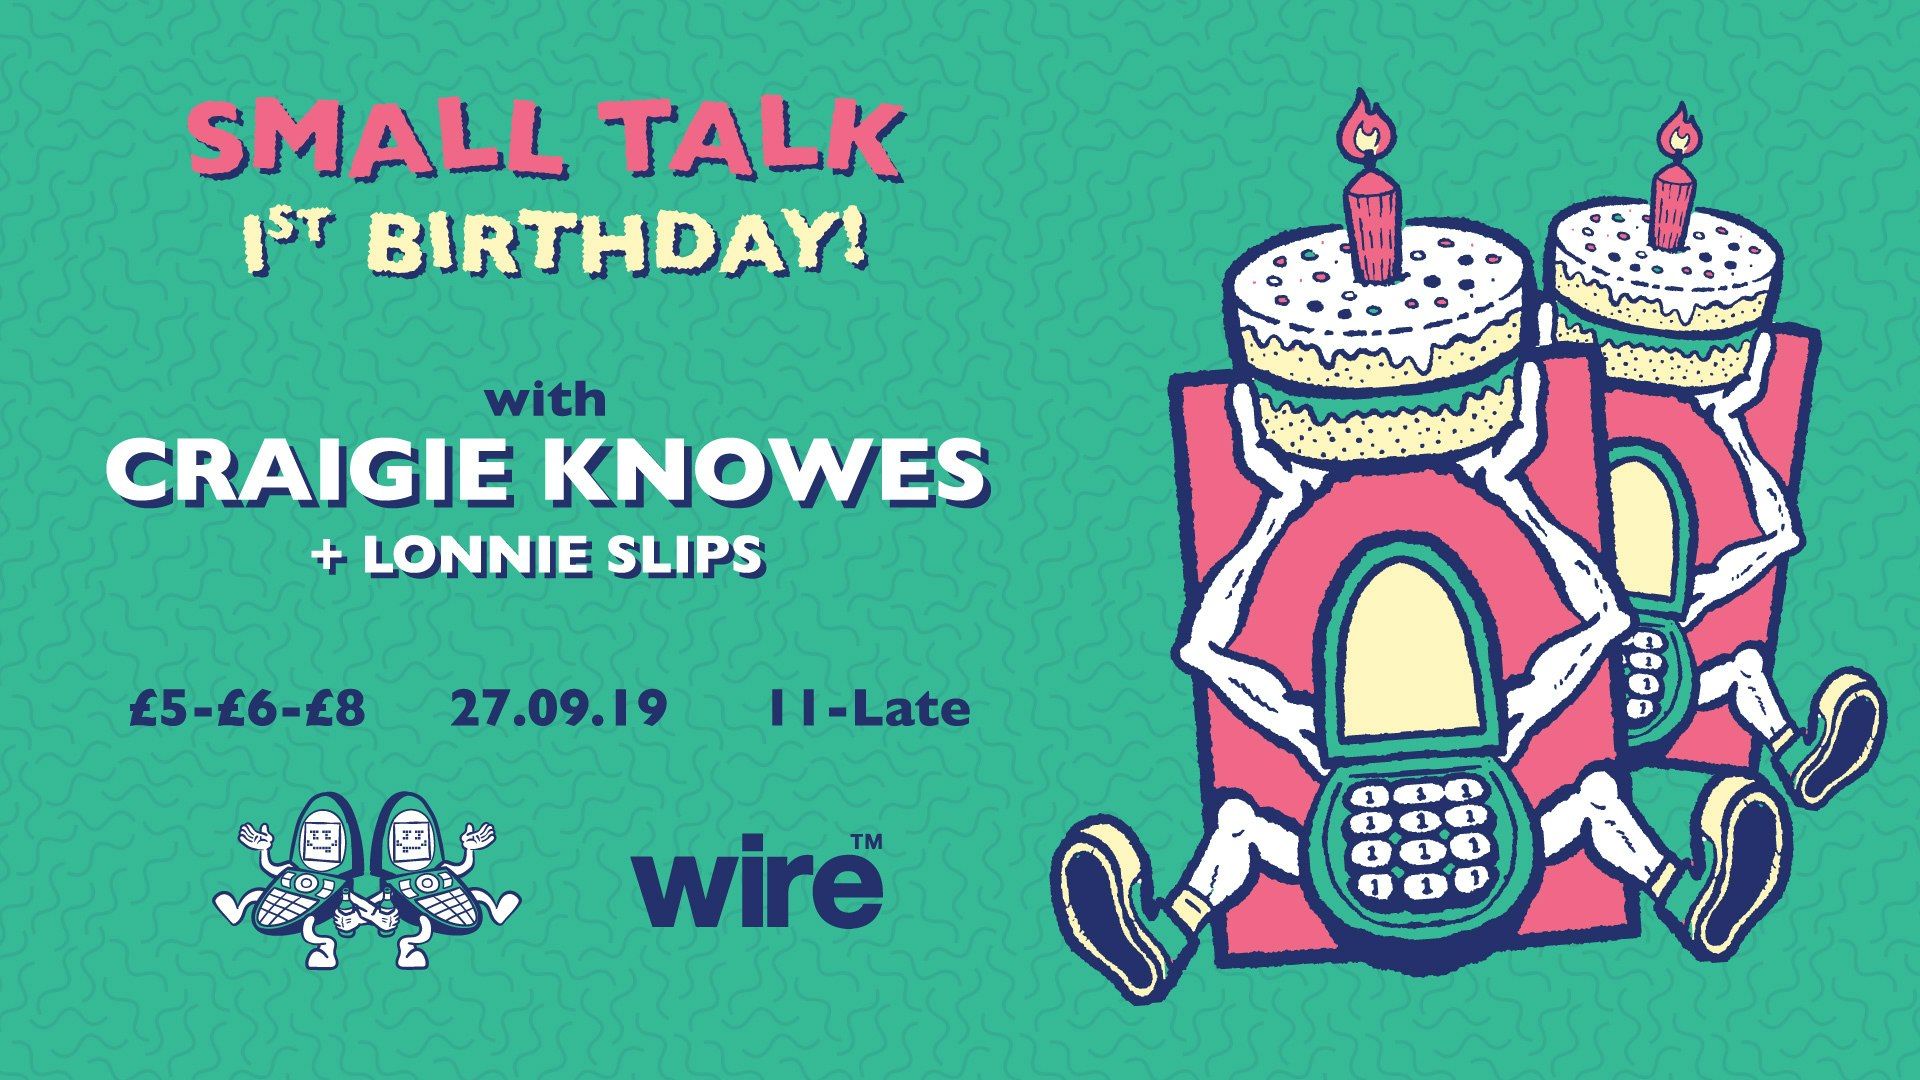 Small Talk 1st Birthday: Craigie Knowes